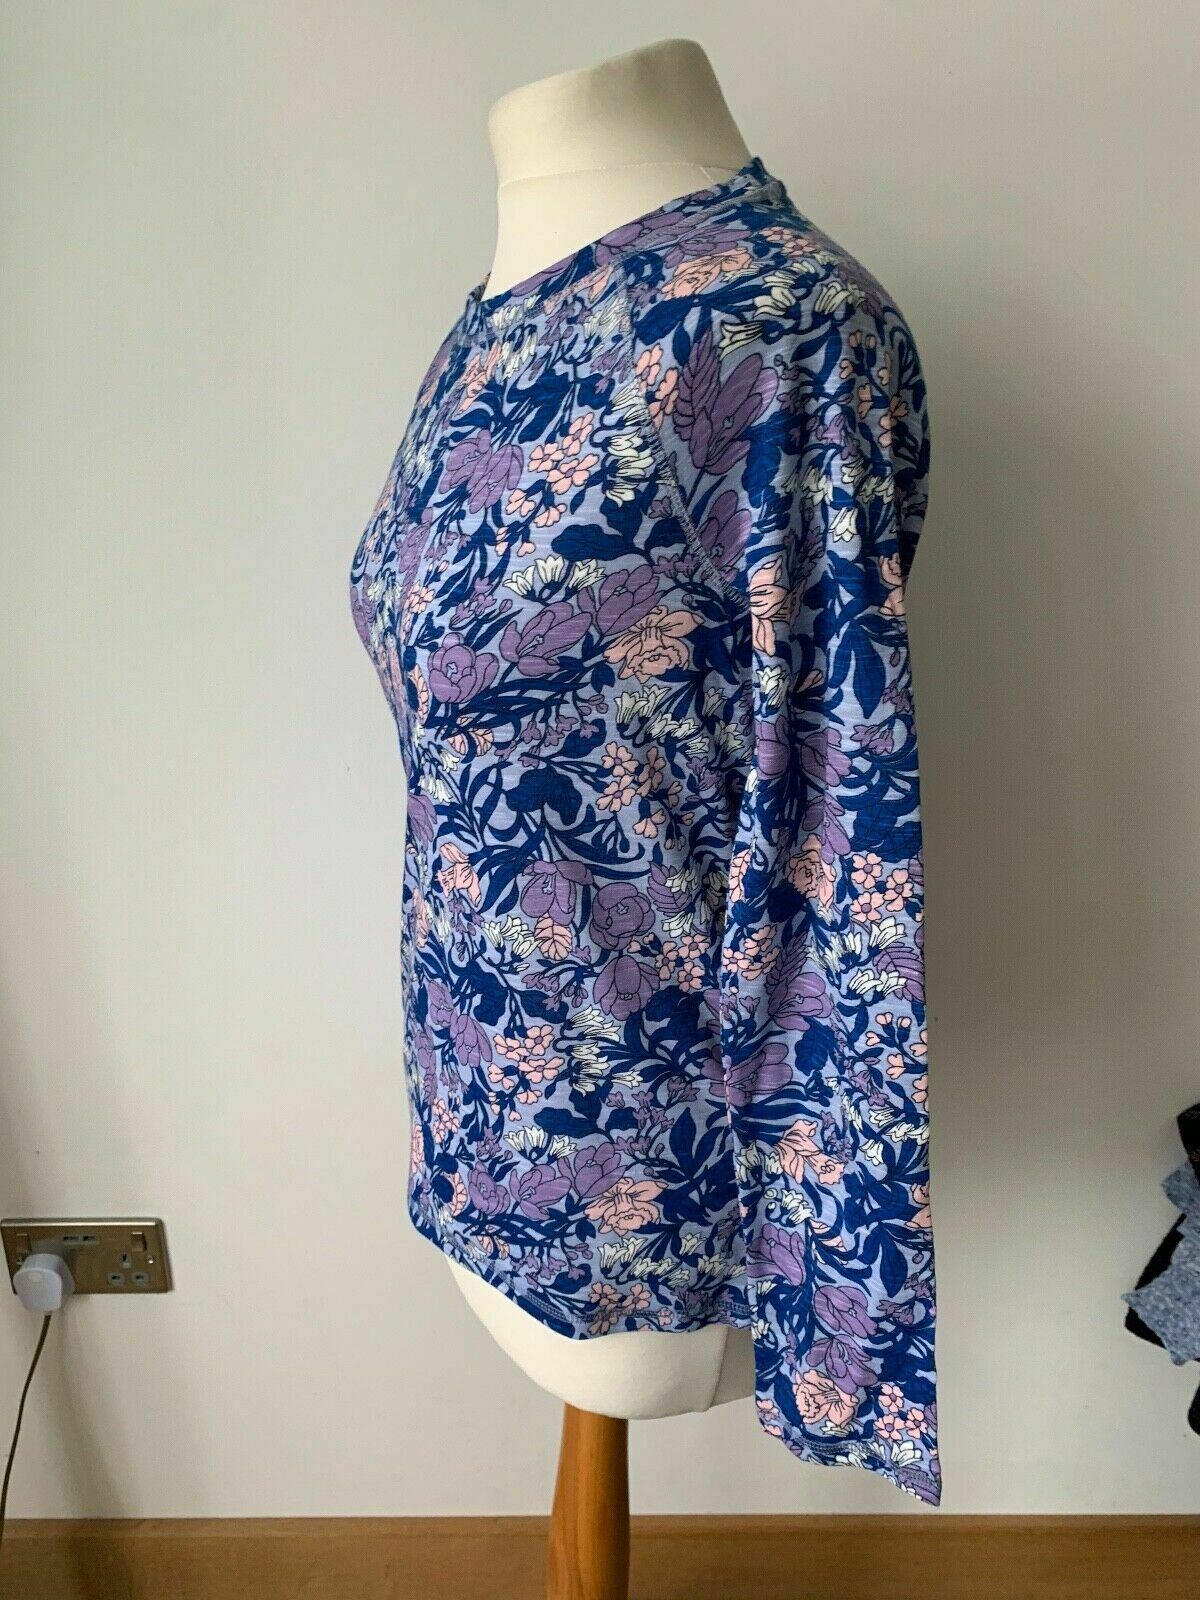 M&S Blue mix Long Sleeve Cotton t-shirt Floral print Size 8 NEW